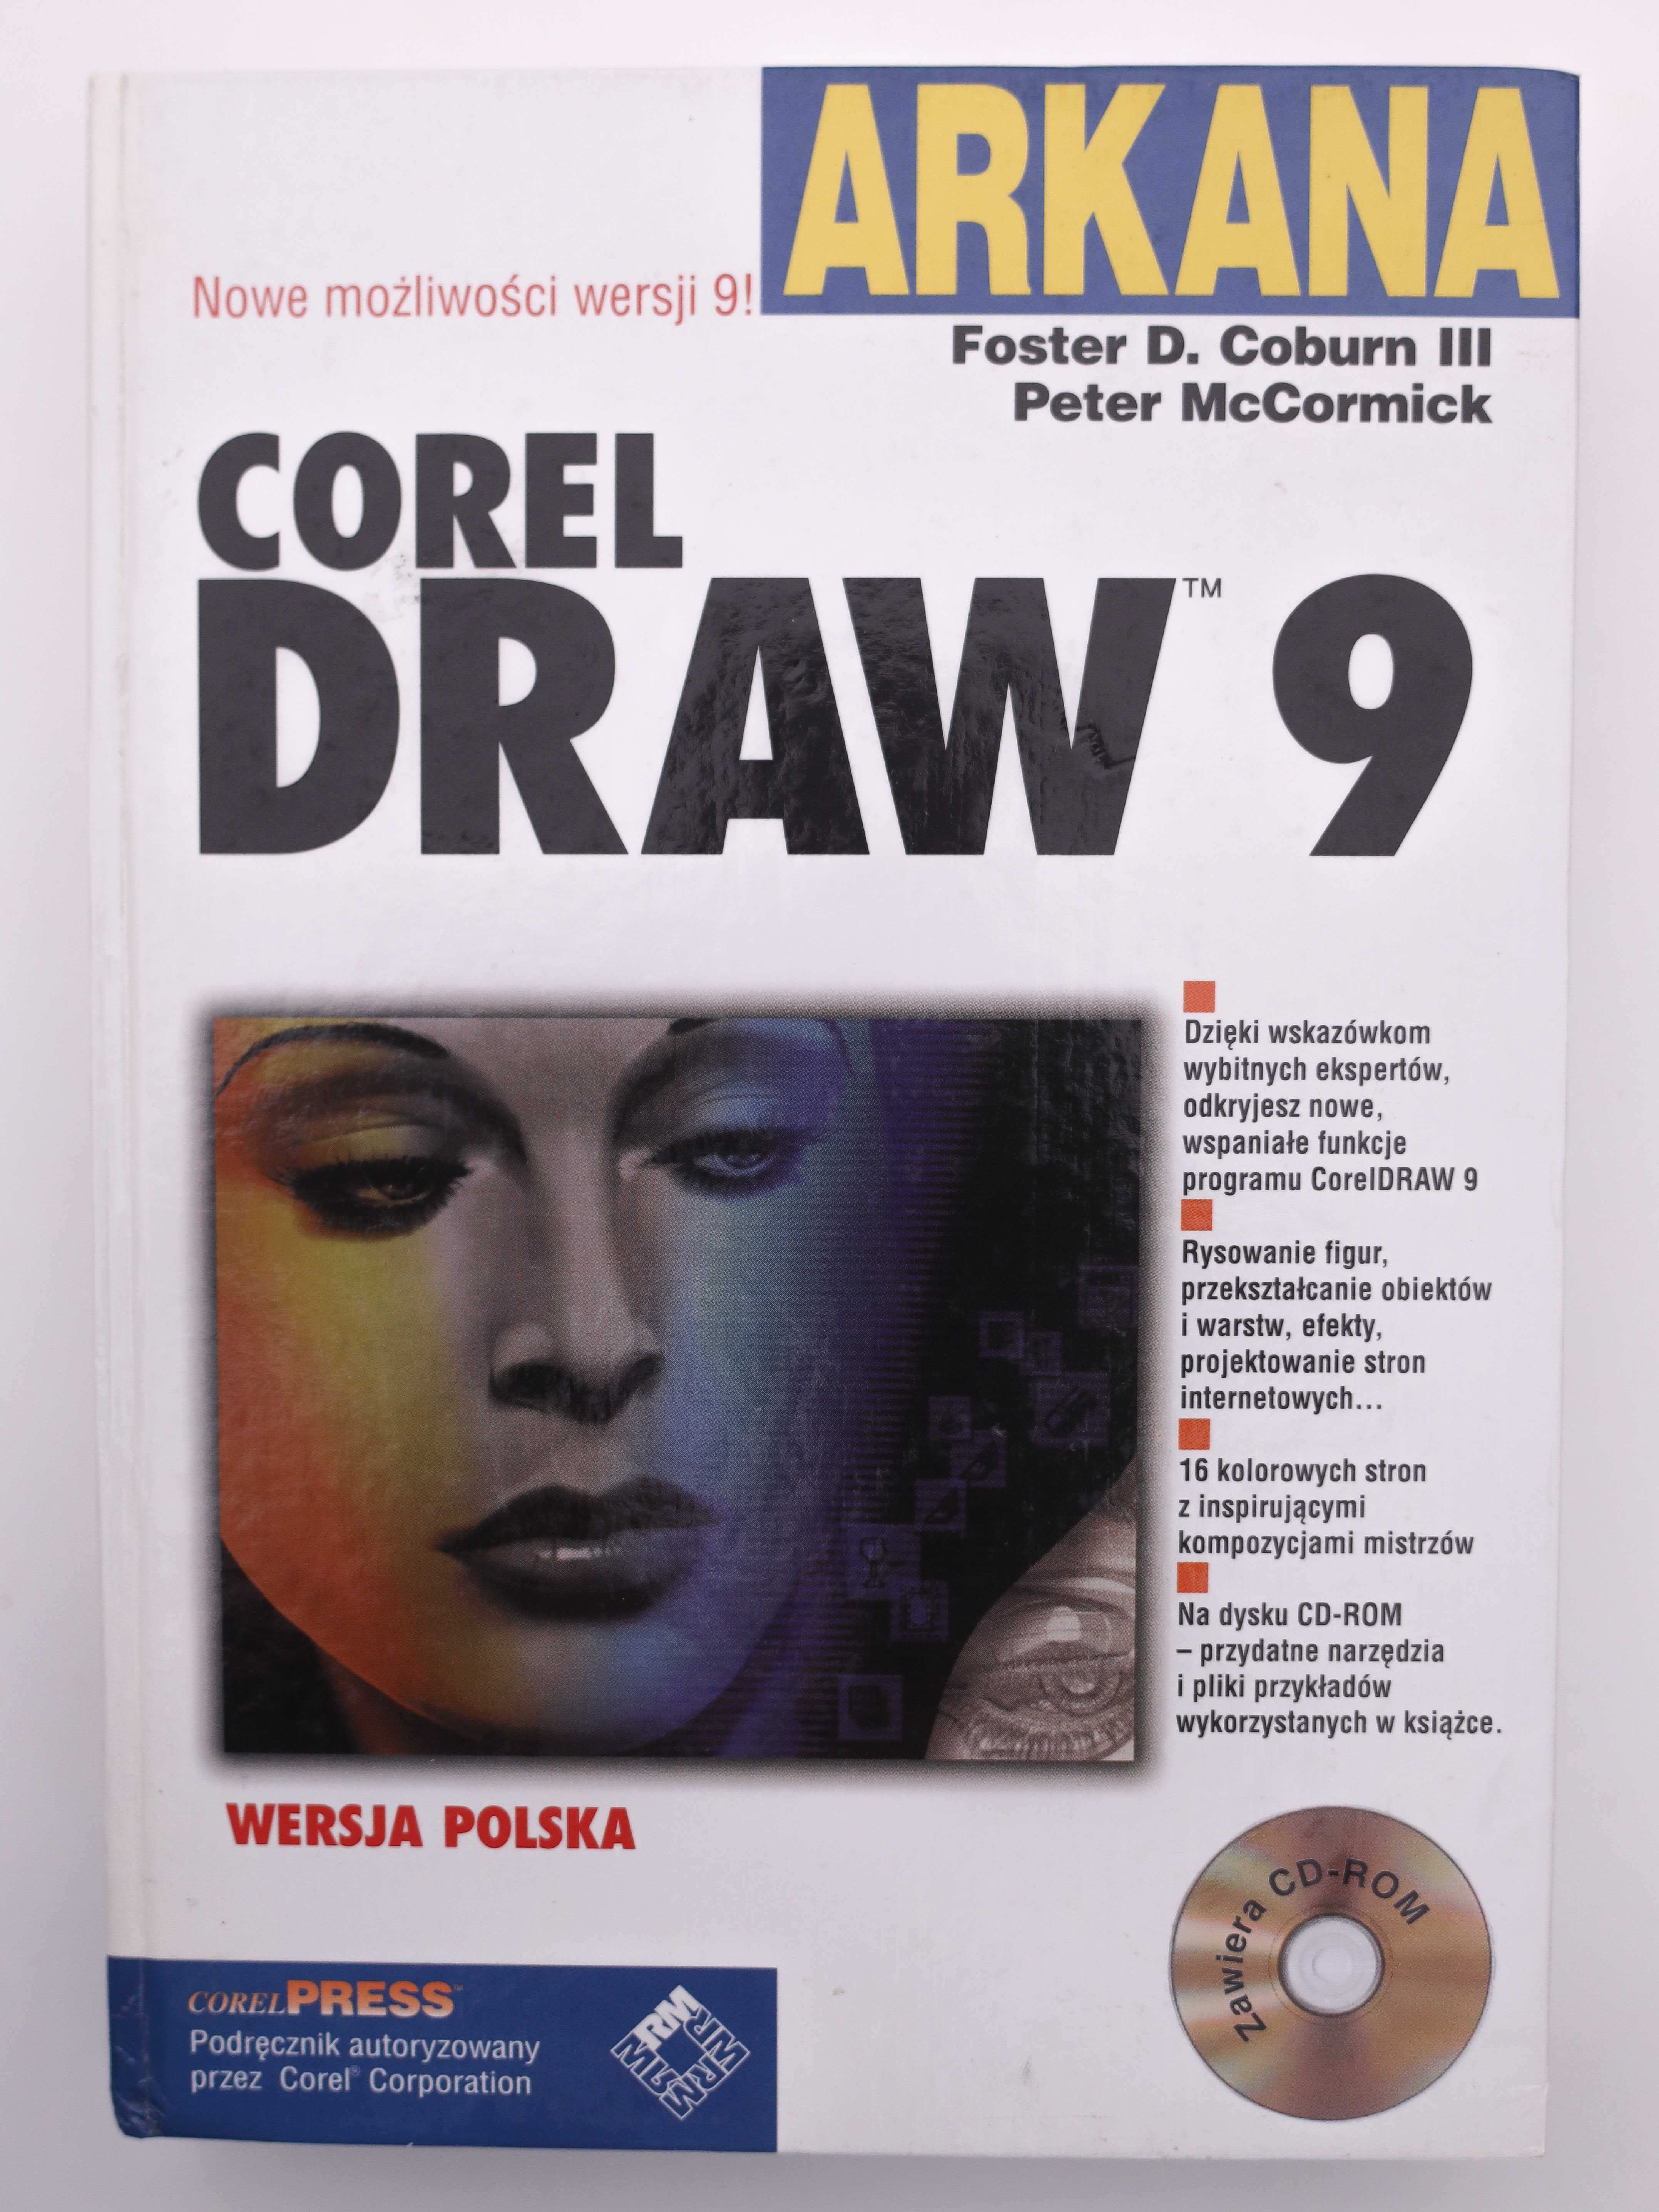 Arkana Corel Draw 9 Coburn D. Foster